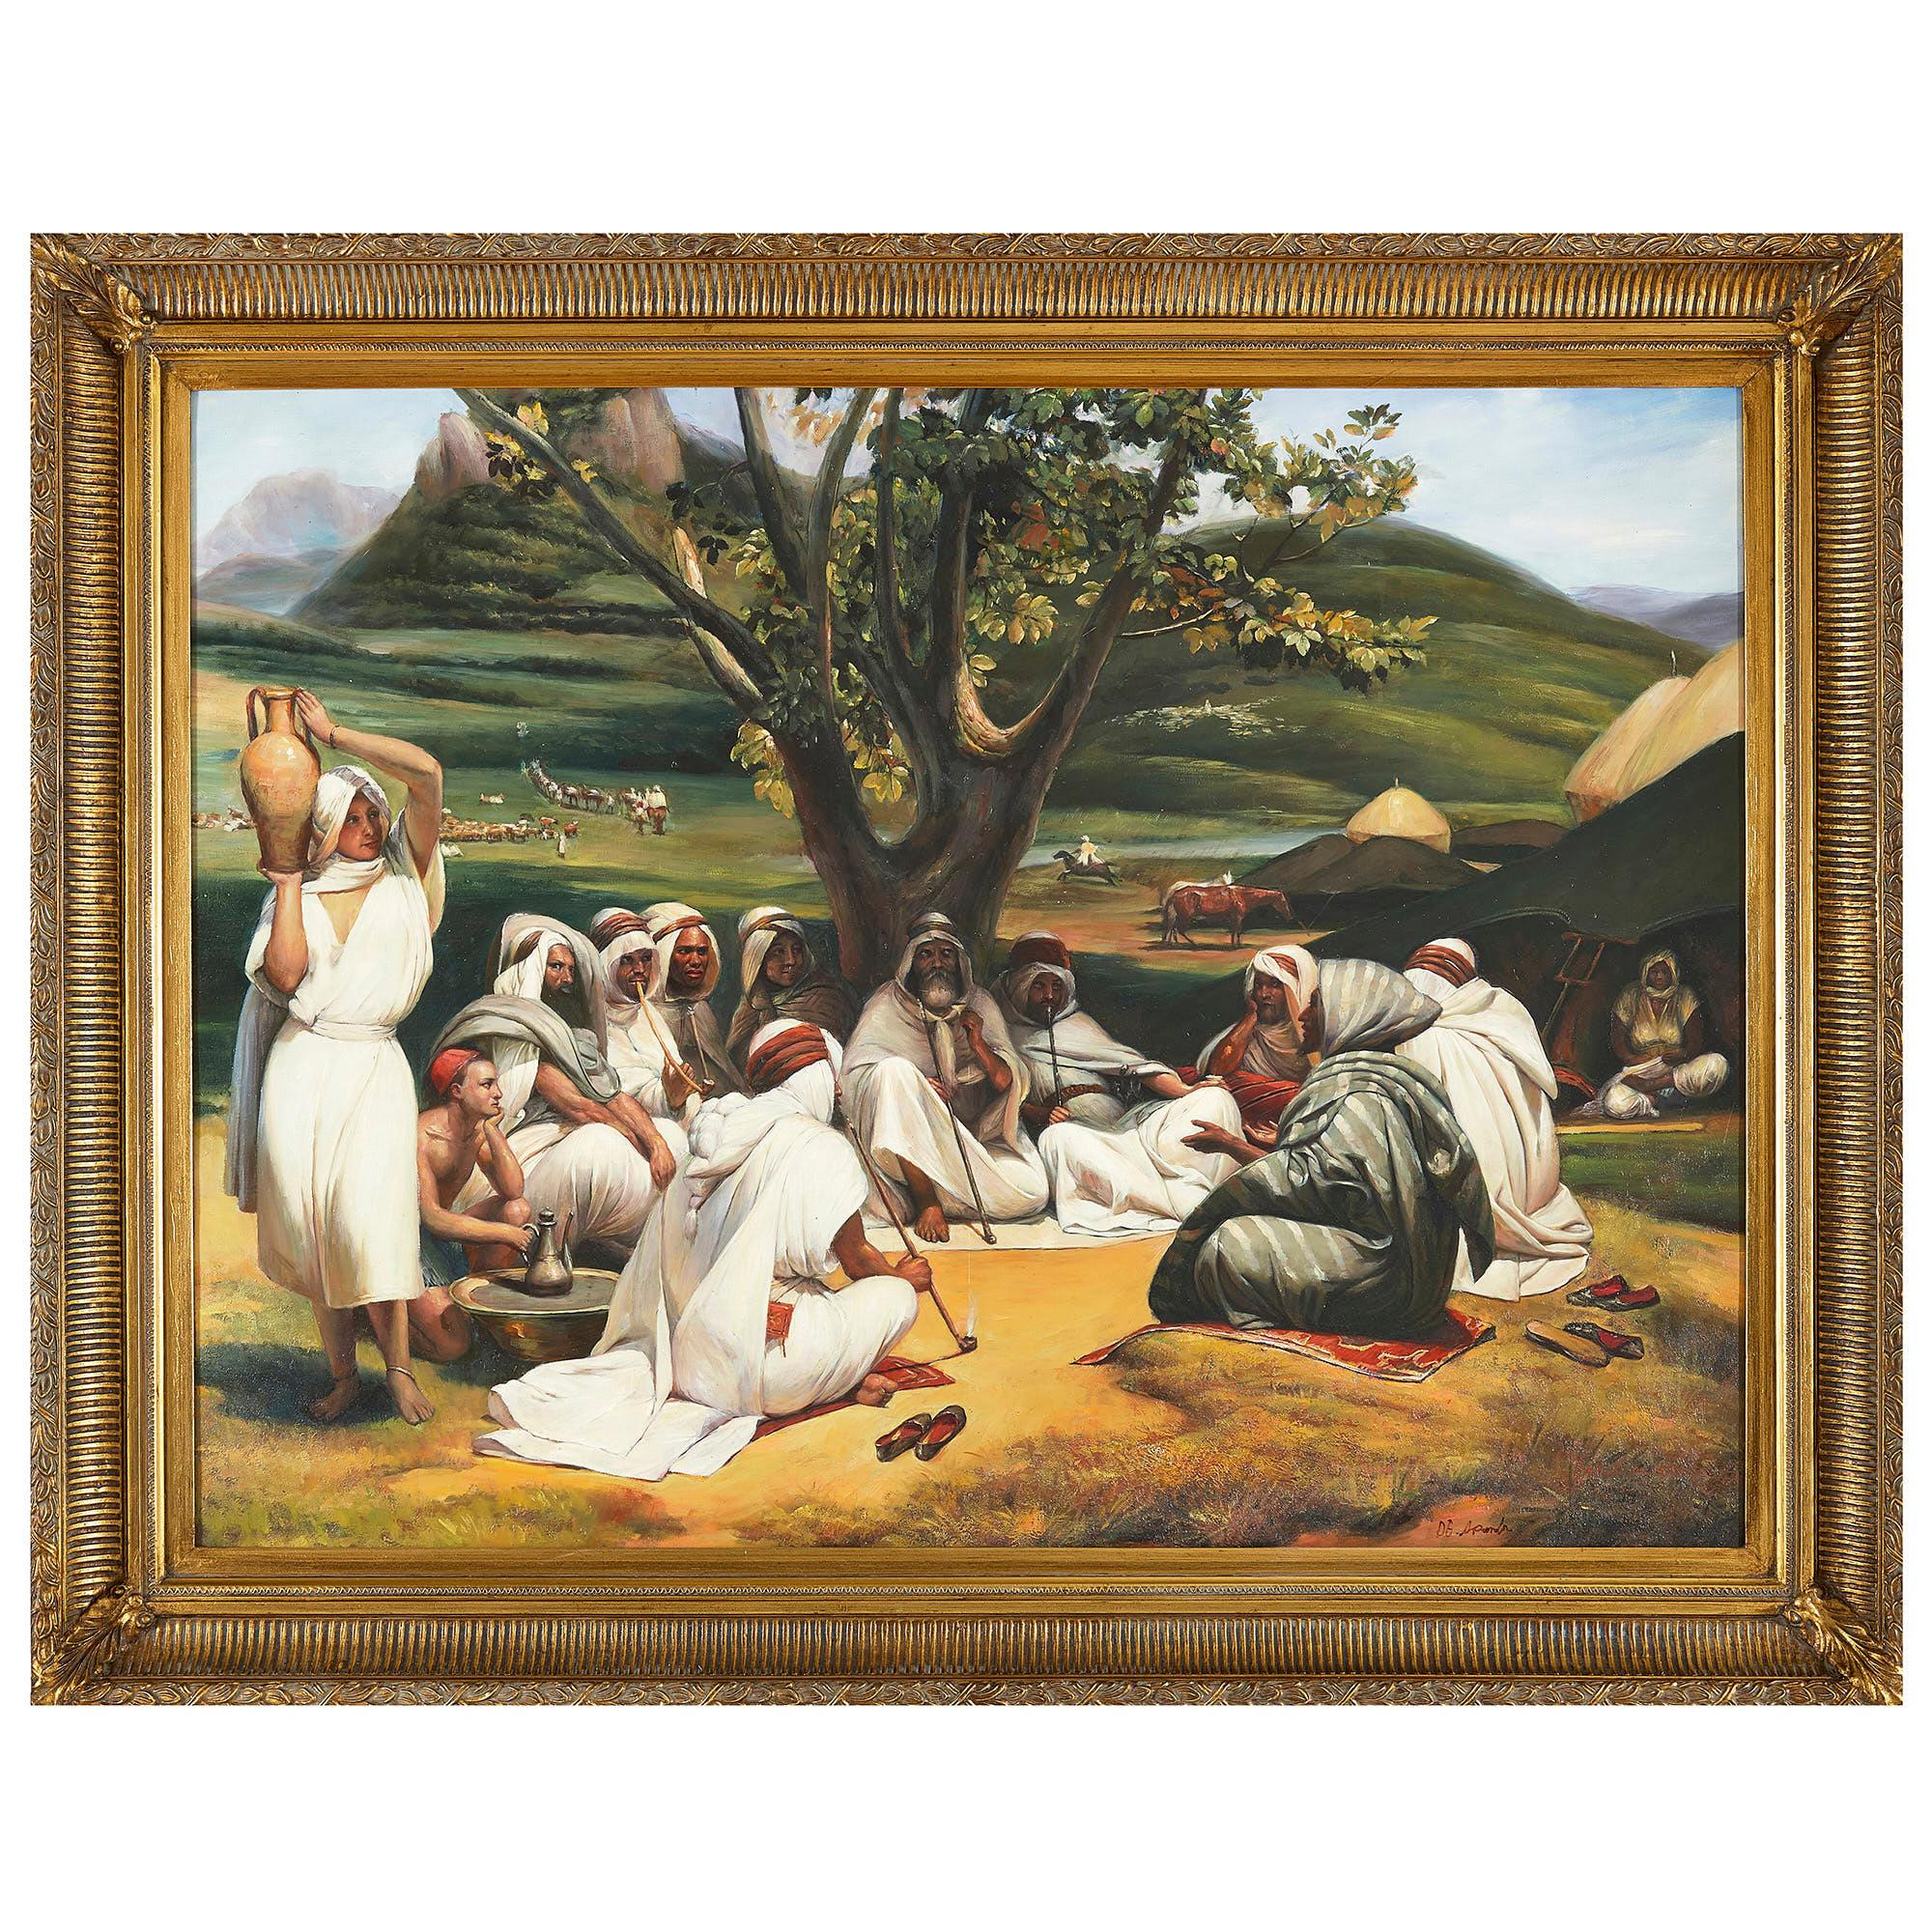 Orientalist painting of herdsmen in a pastoral landscape